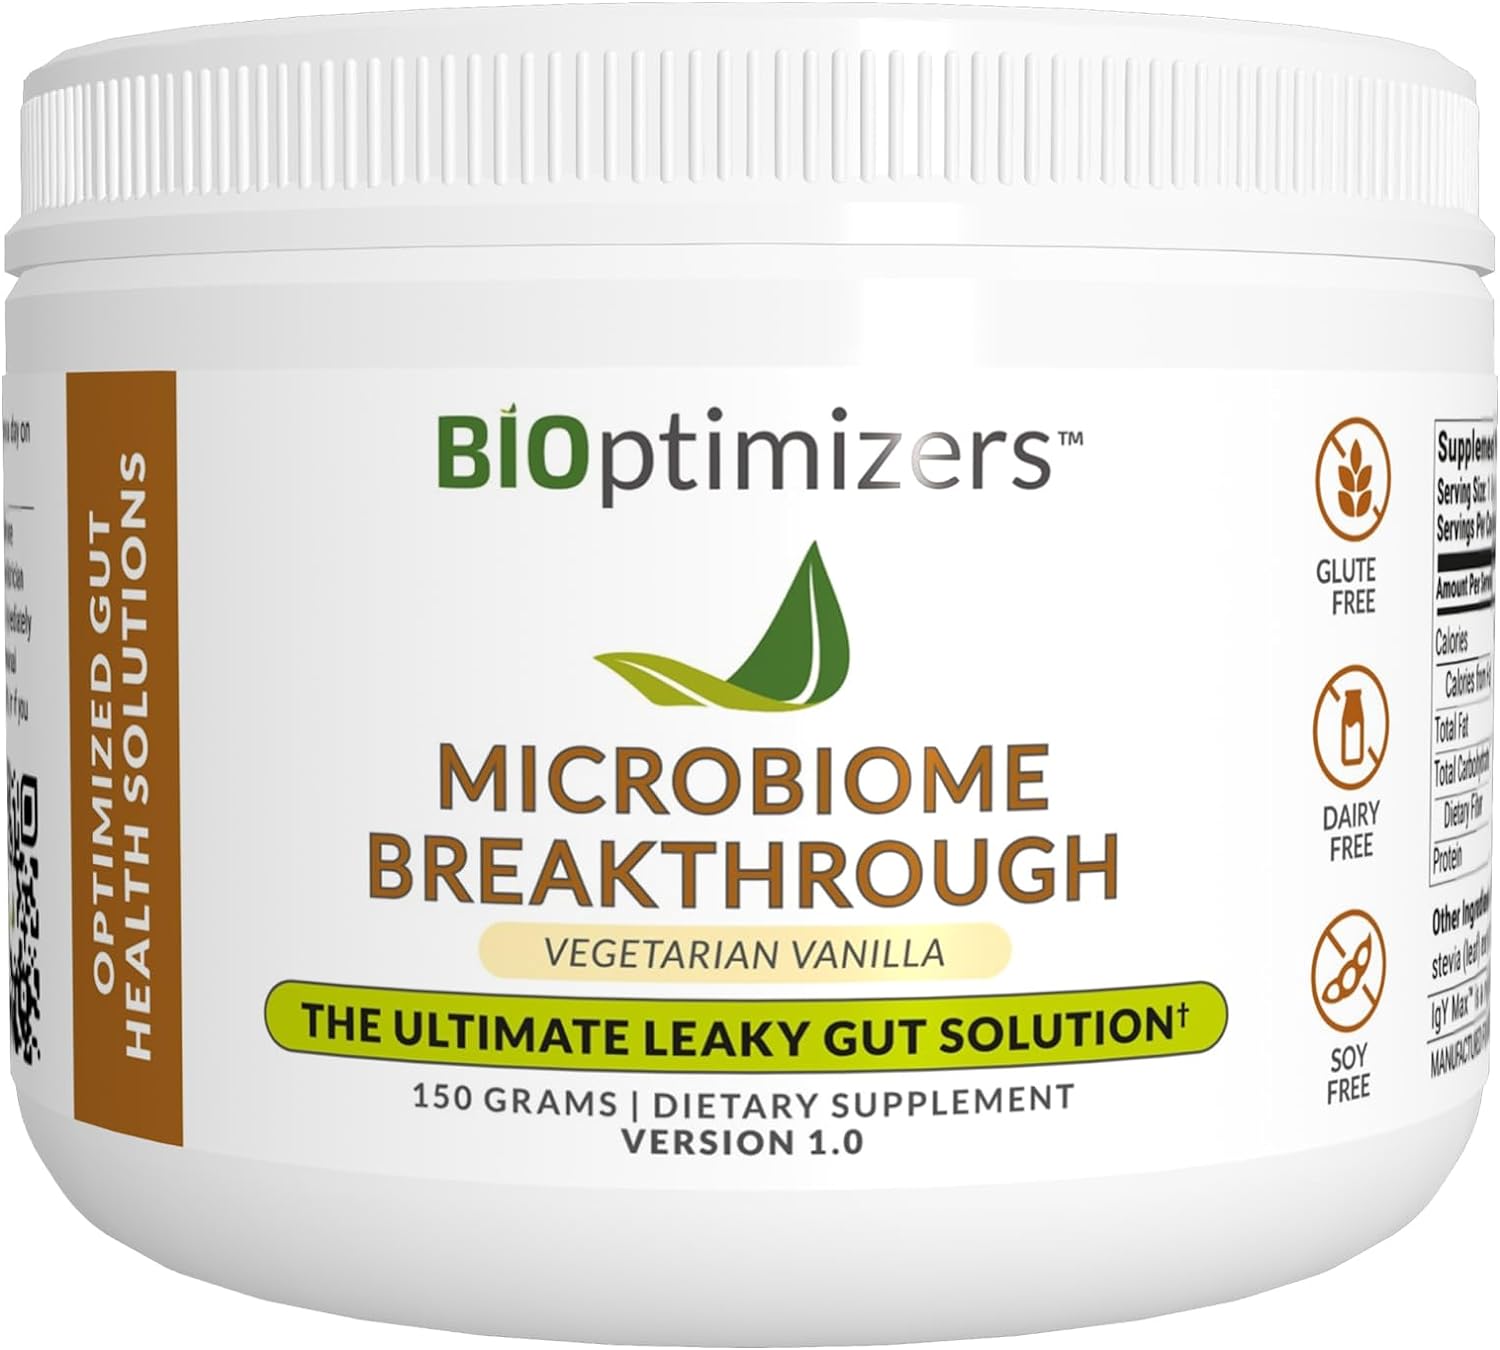 Microbiome Breakthrough Repair Powder - Vegetarian Vanilla - Contains 5.3 Ounces